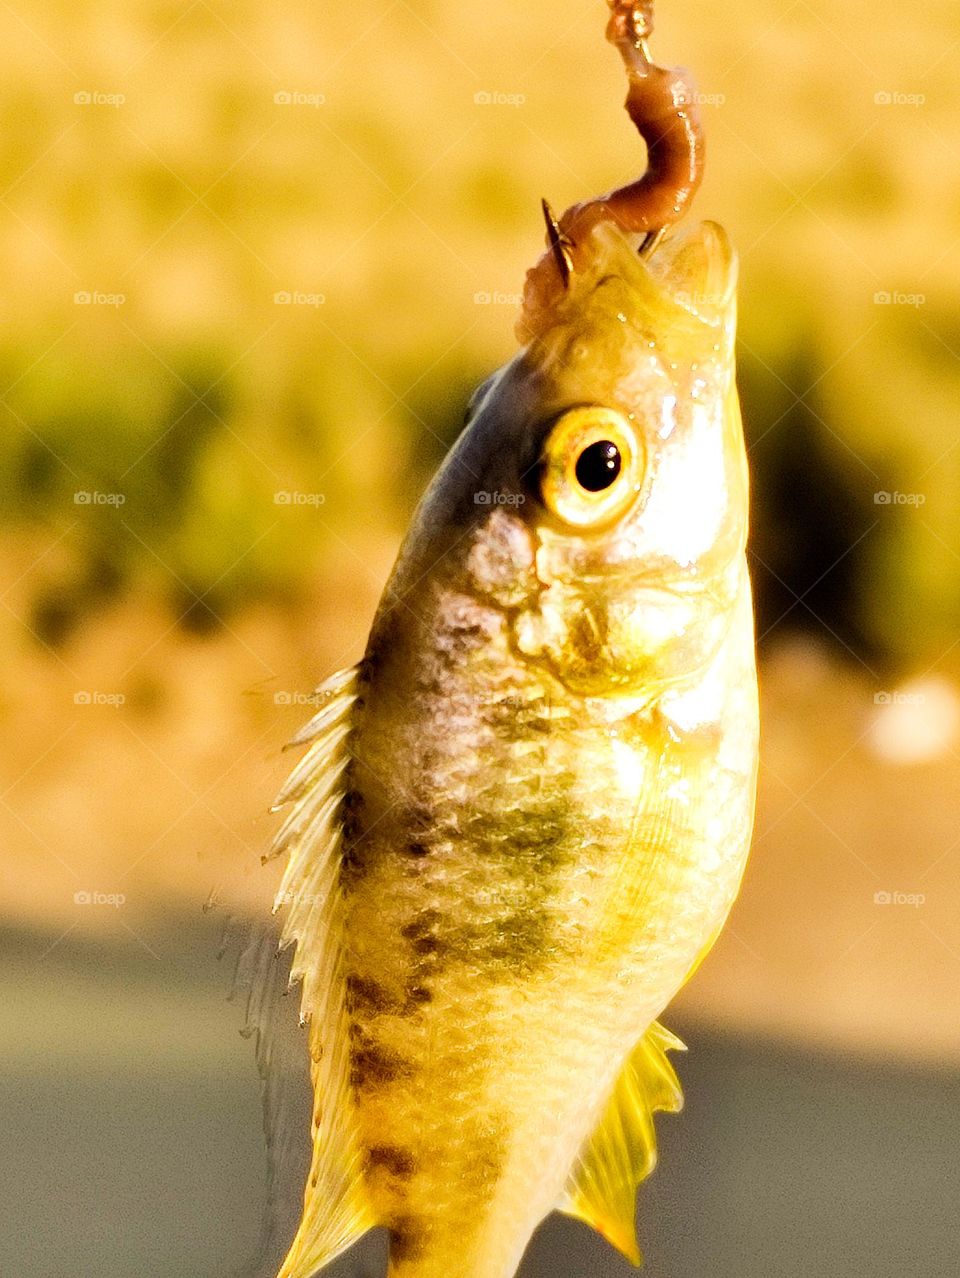 amazing Golden fish